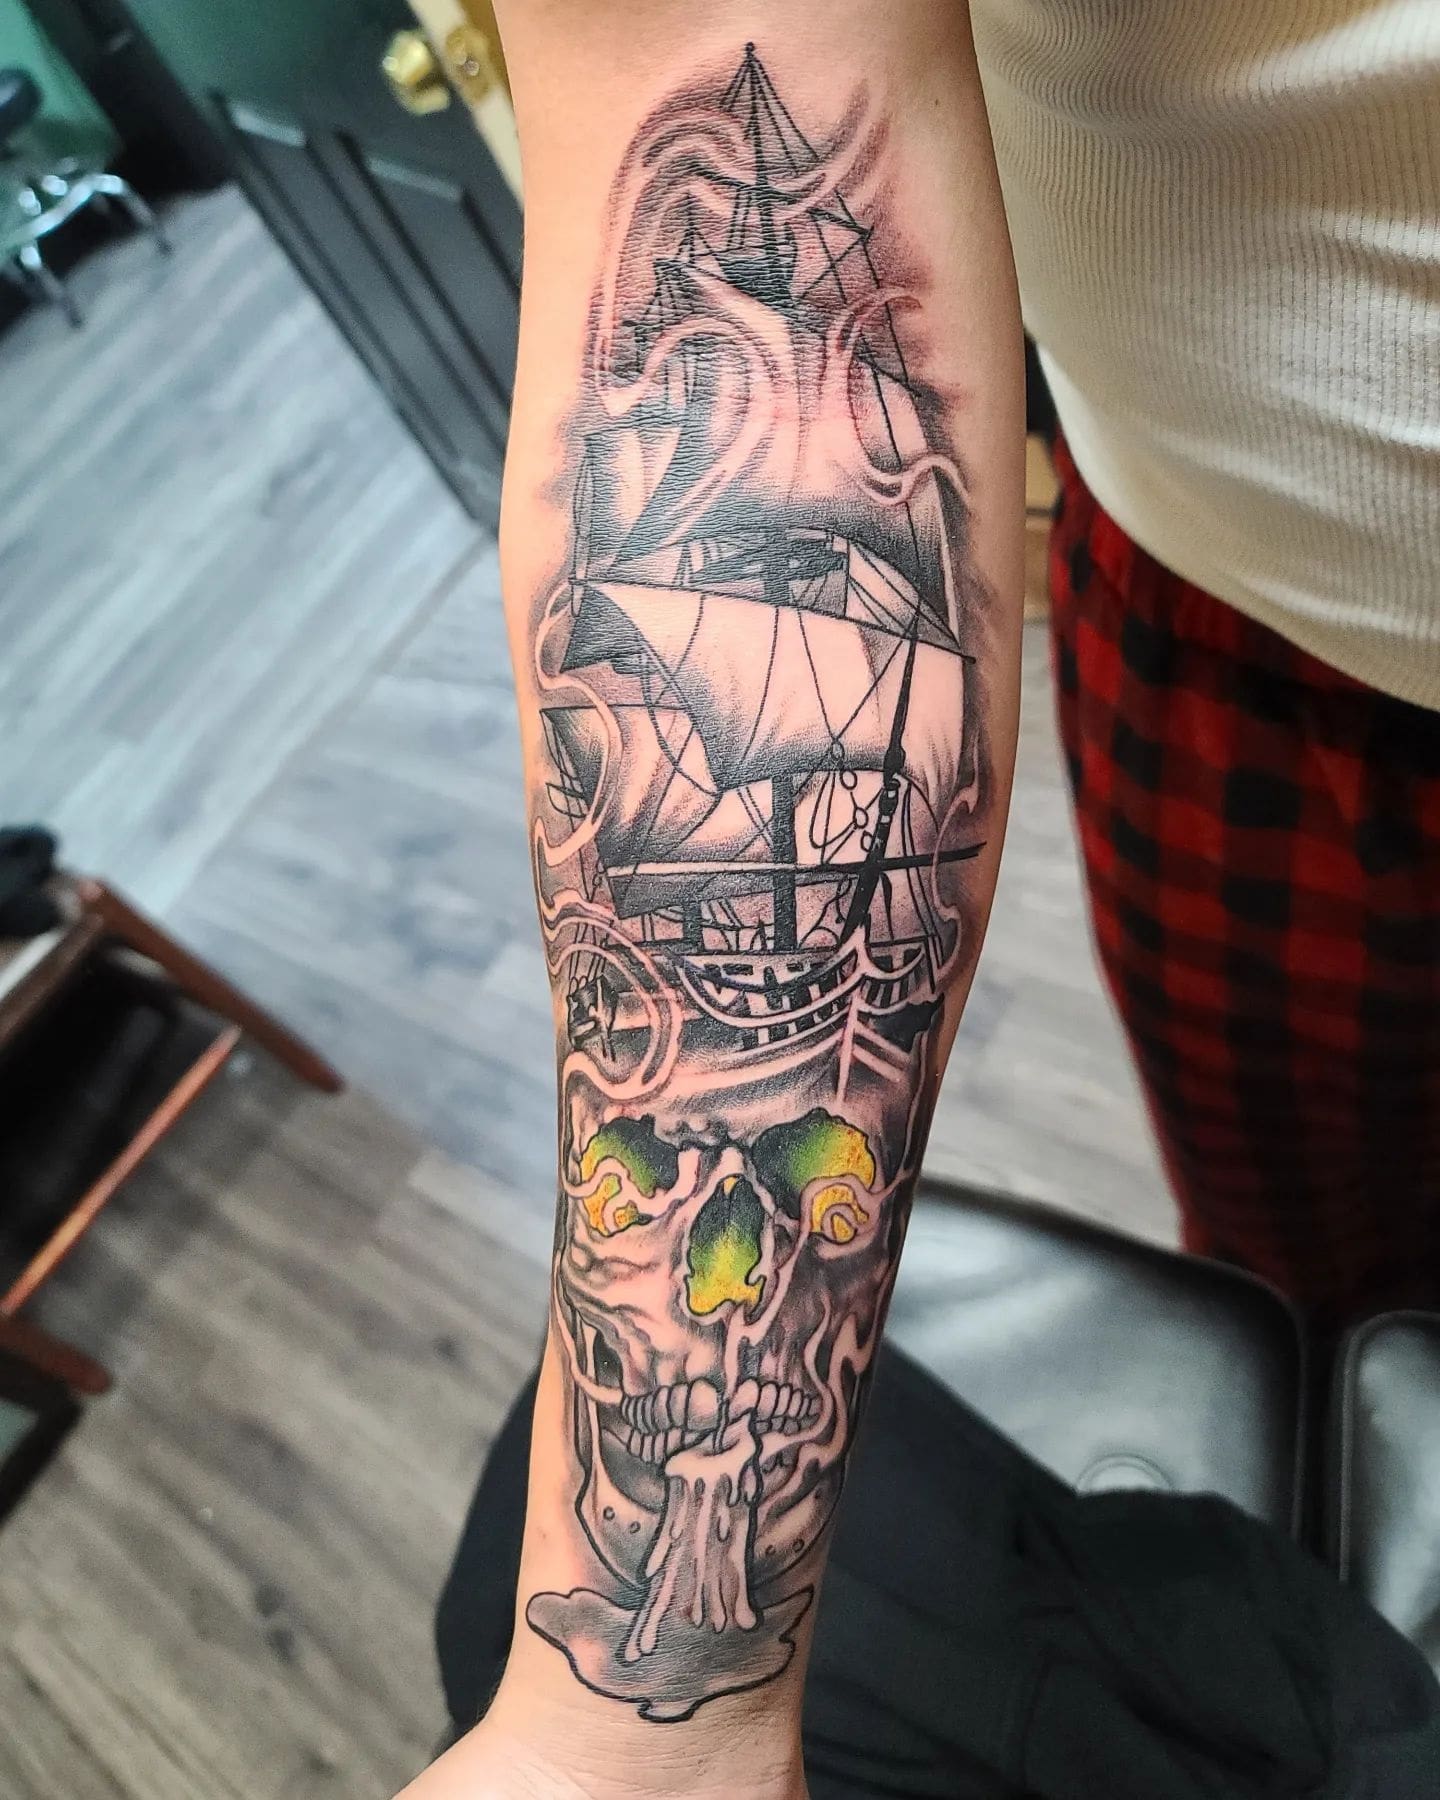 Pirate Ship and Skull Tattoo